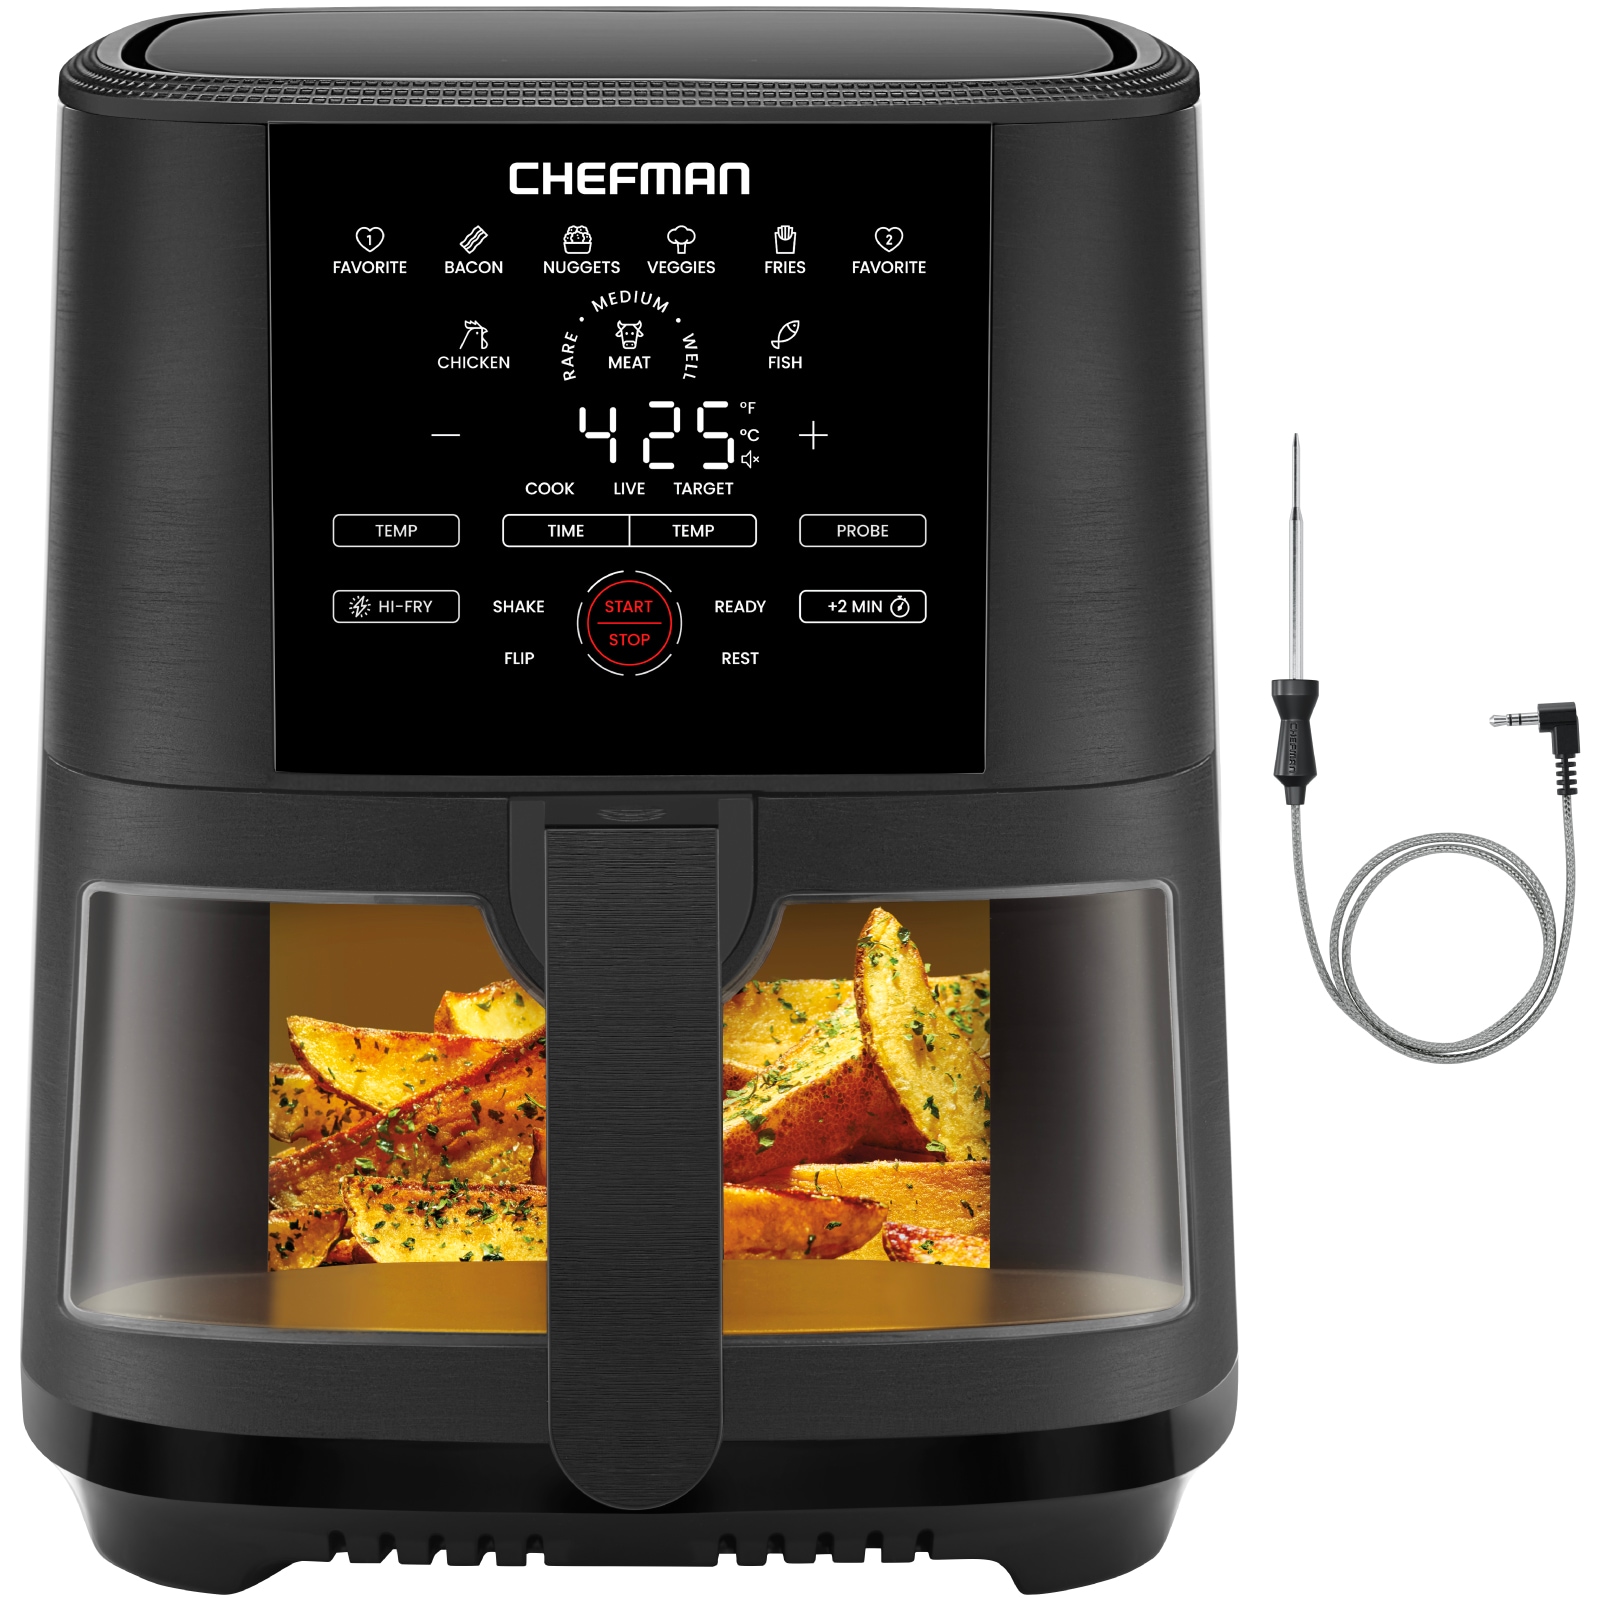 Chefman Black TurboFry 5-Quart Air Fryer